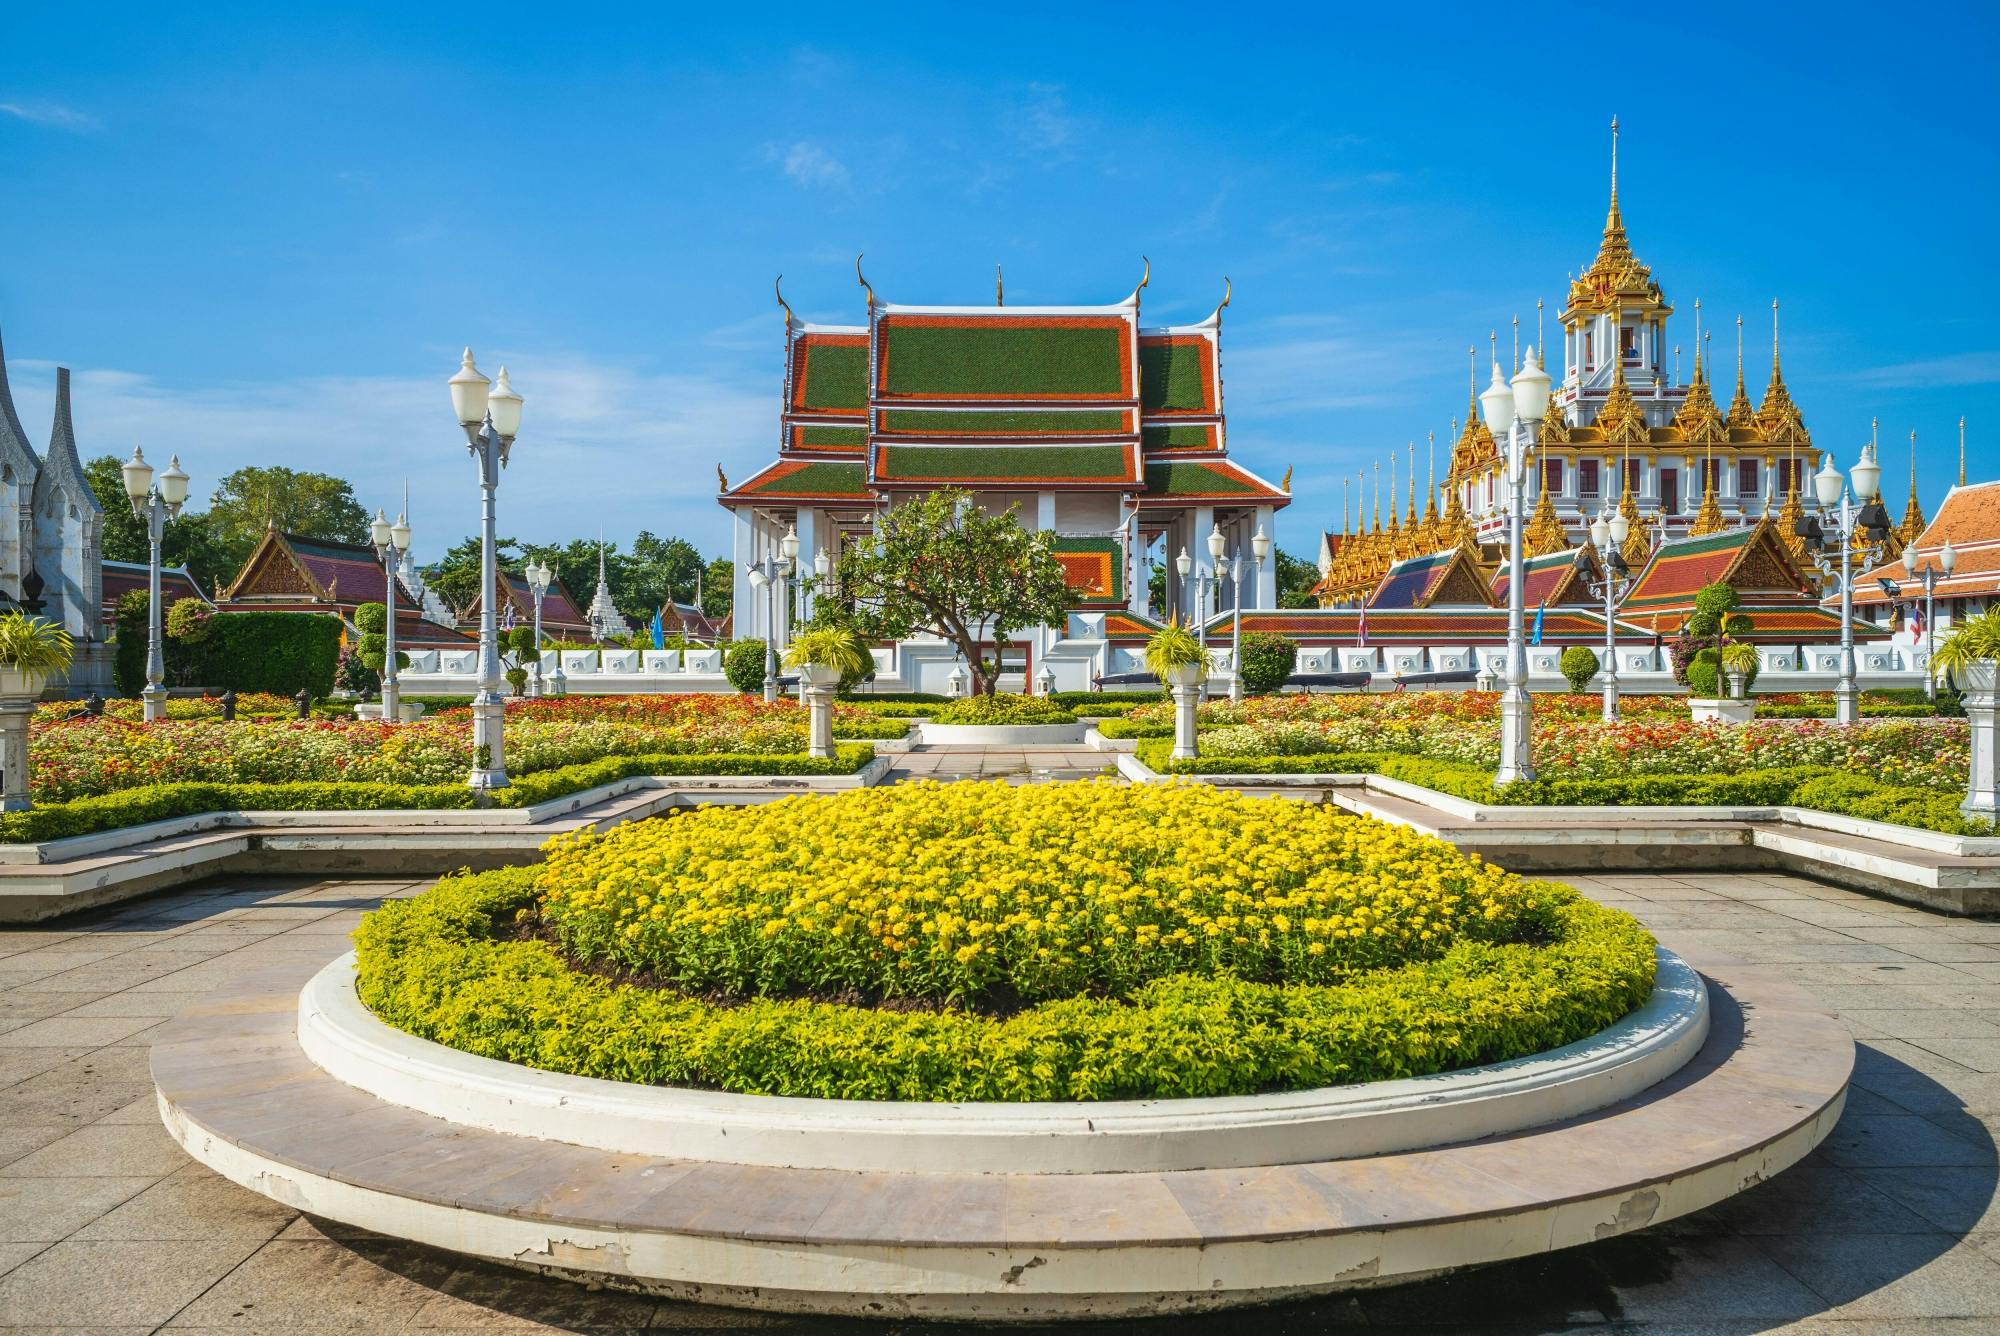 Spasertur i Phra Nakhon med Wat Suthan, Bangkok